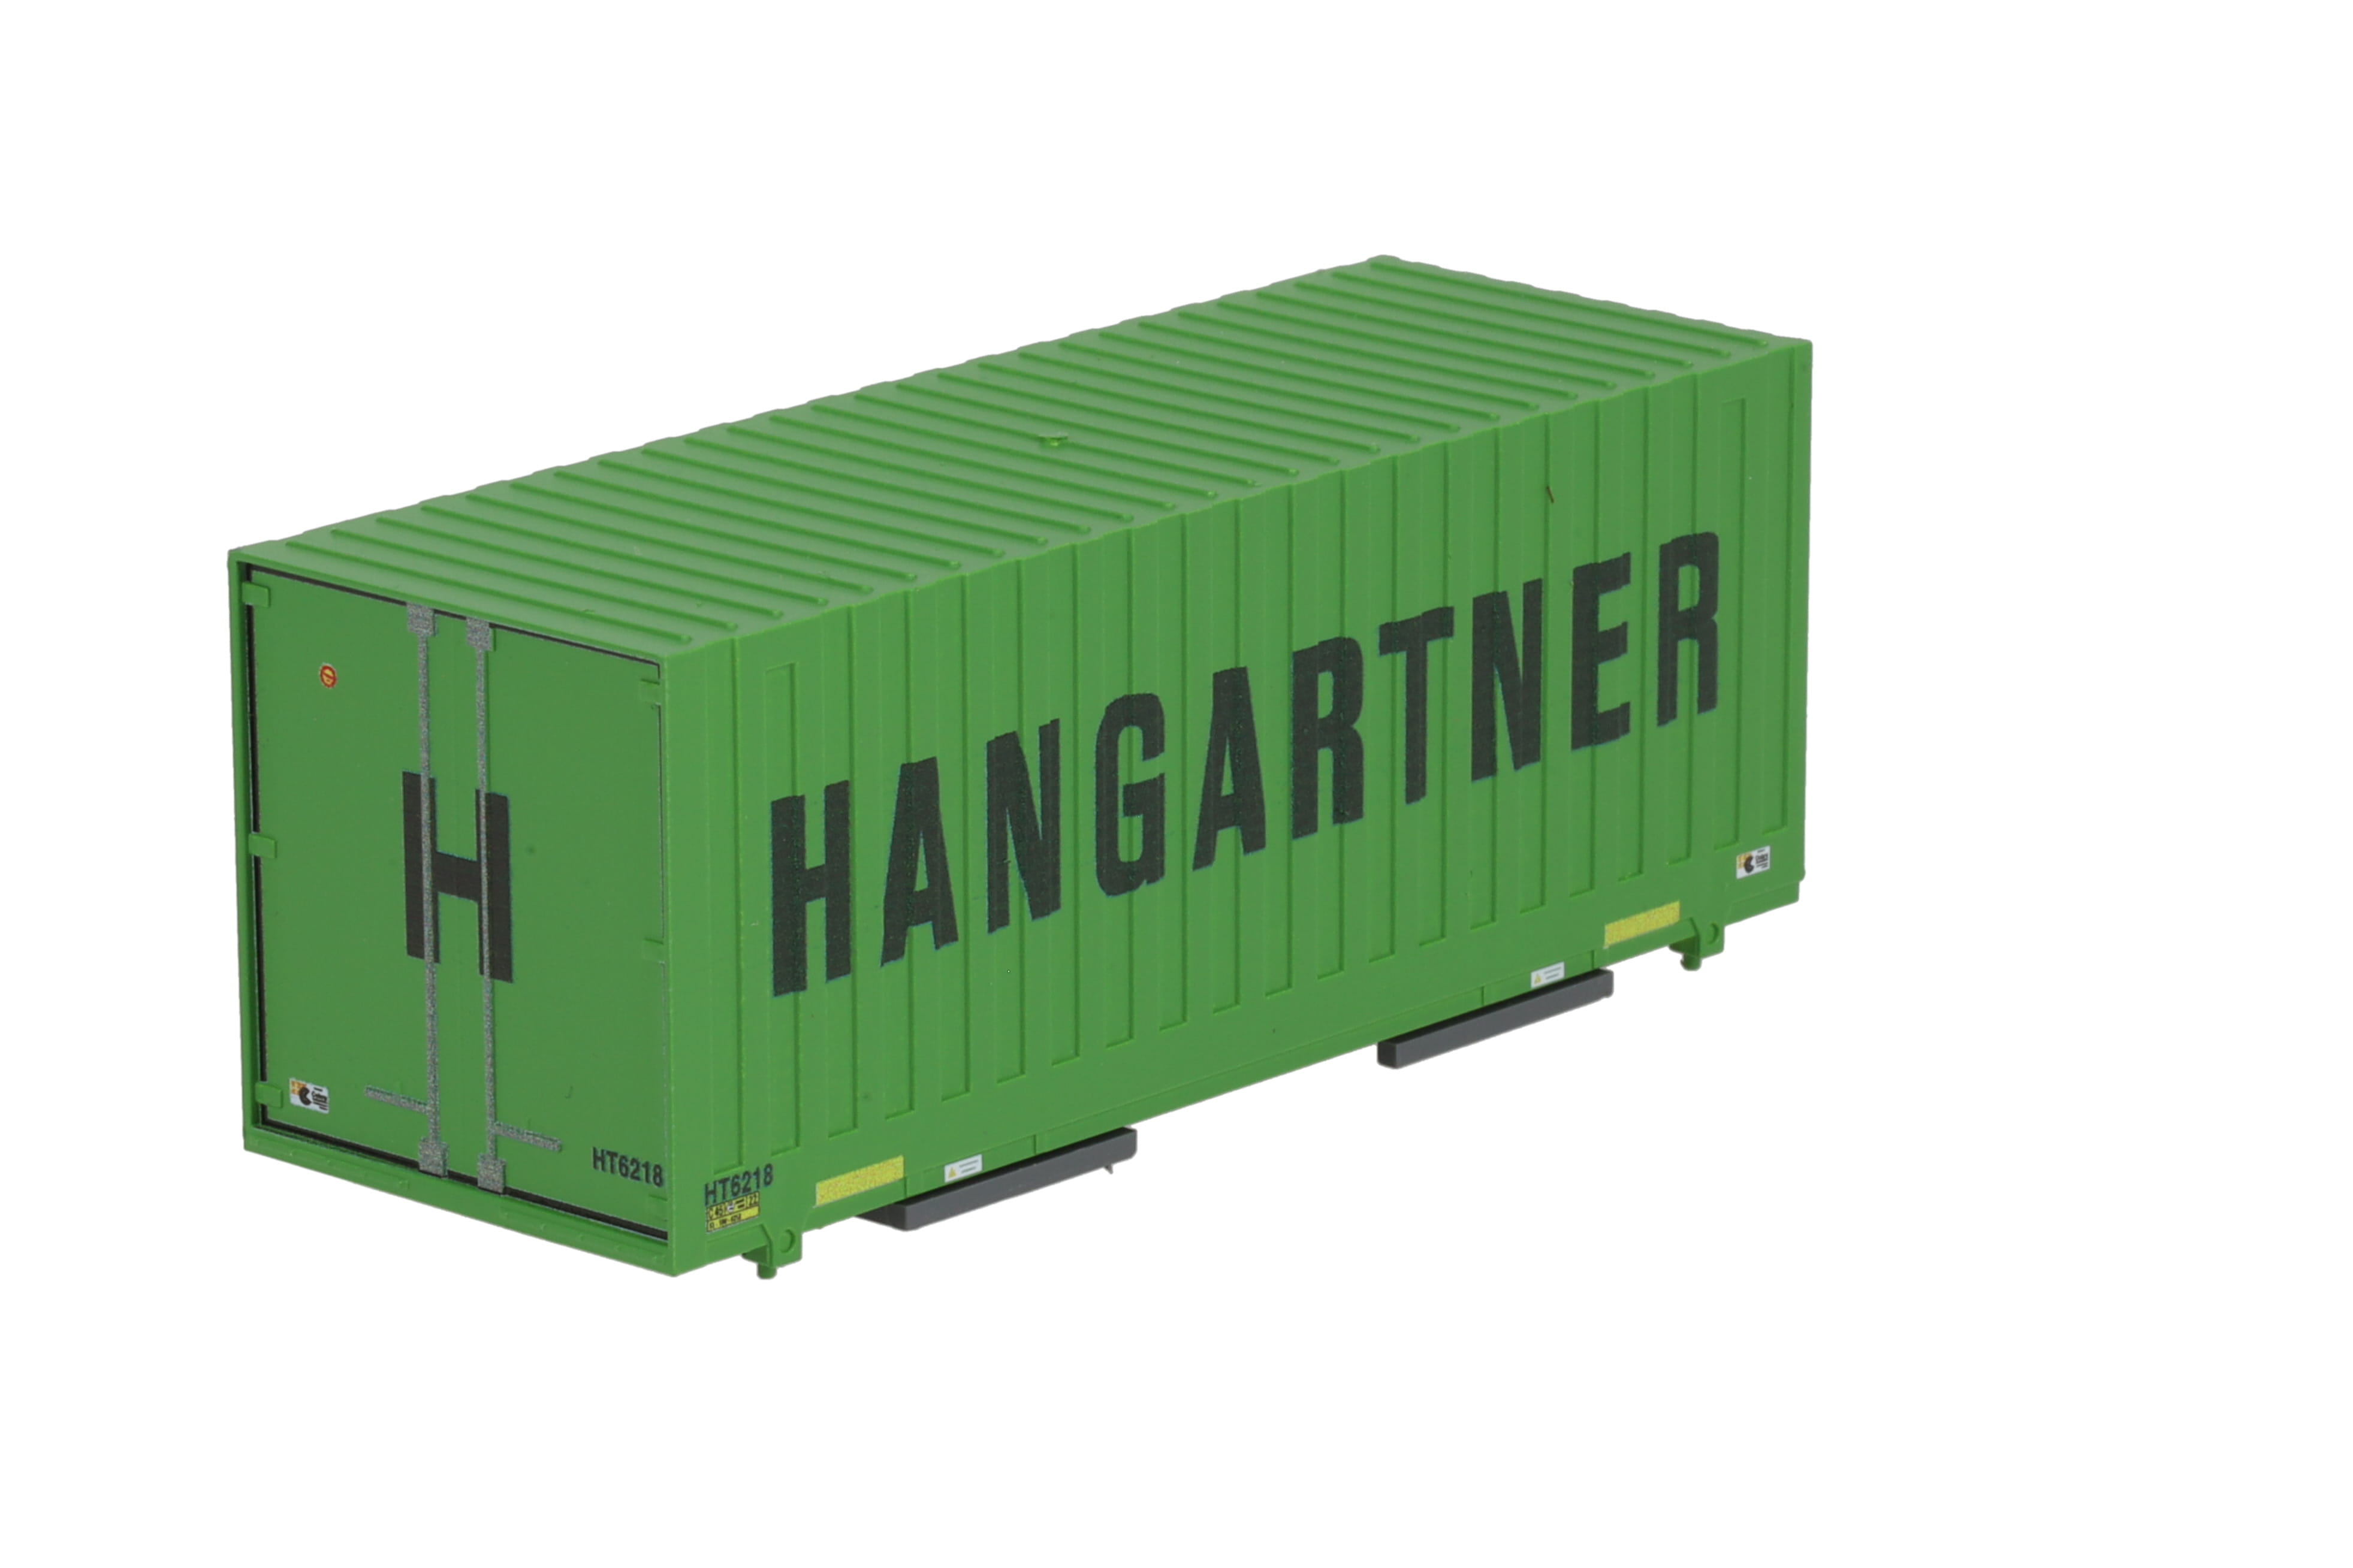 1:87 Container WB-C715 HANGAR Wechselbehälter WB-C 715 Cobra Spu-Wa Box, Aufschrift: HANGARTNER, Behälter-Nr: HT 6218